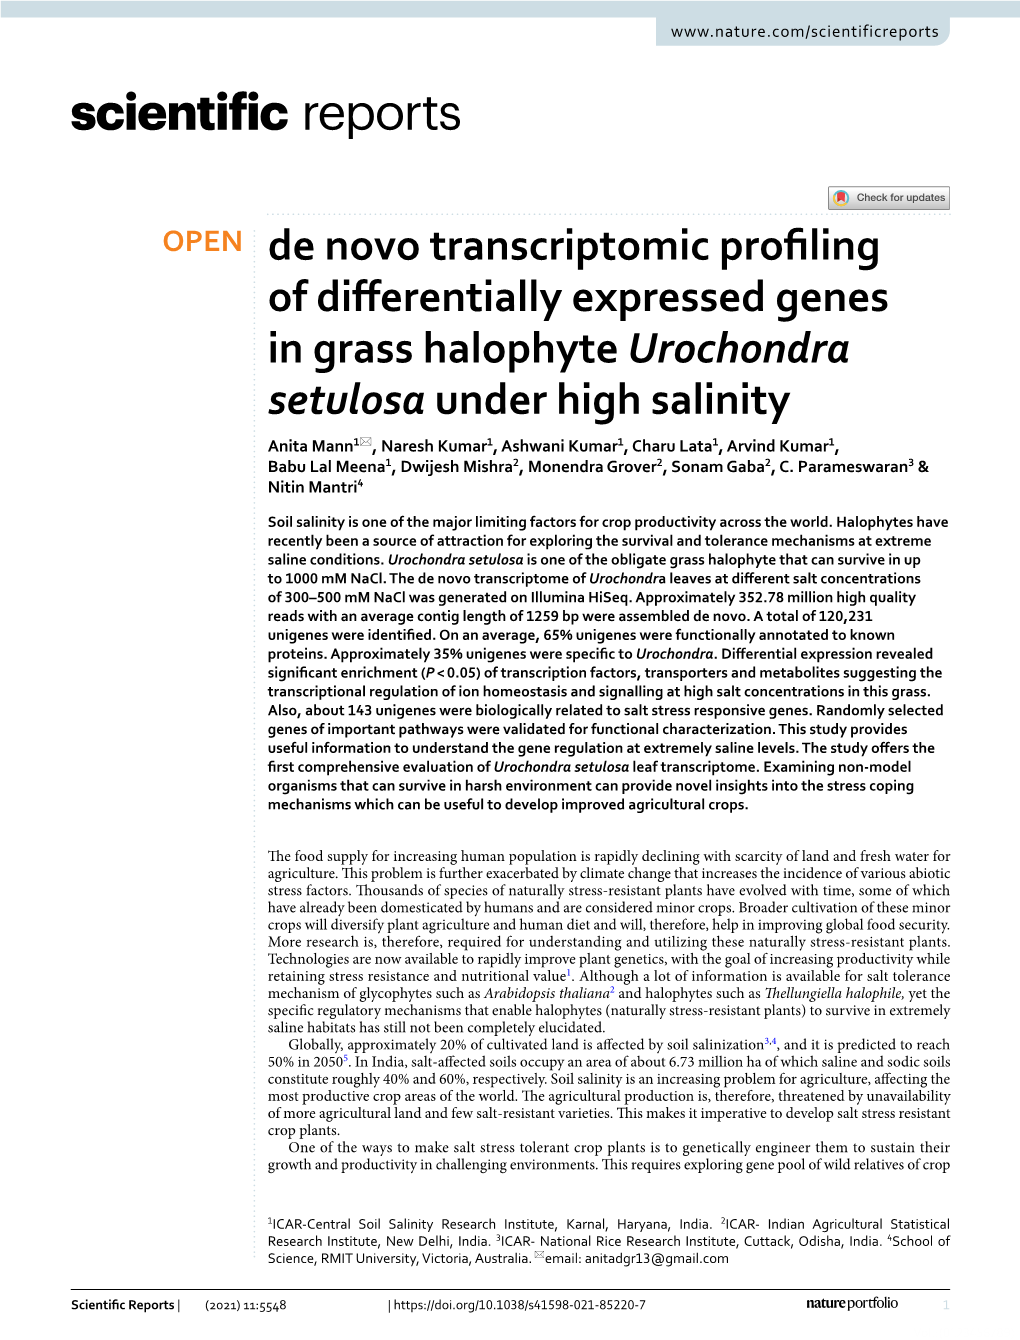 De Novo Transcriptomic Profiling of Differentially Expressed Genes In